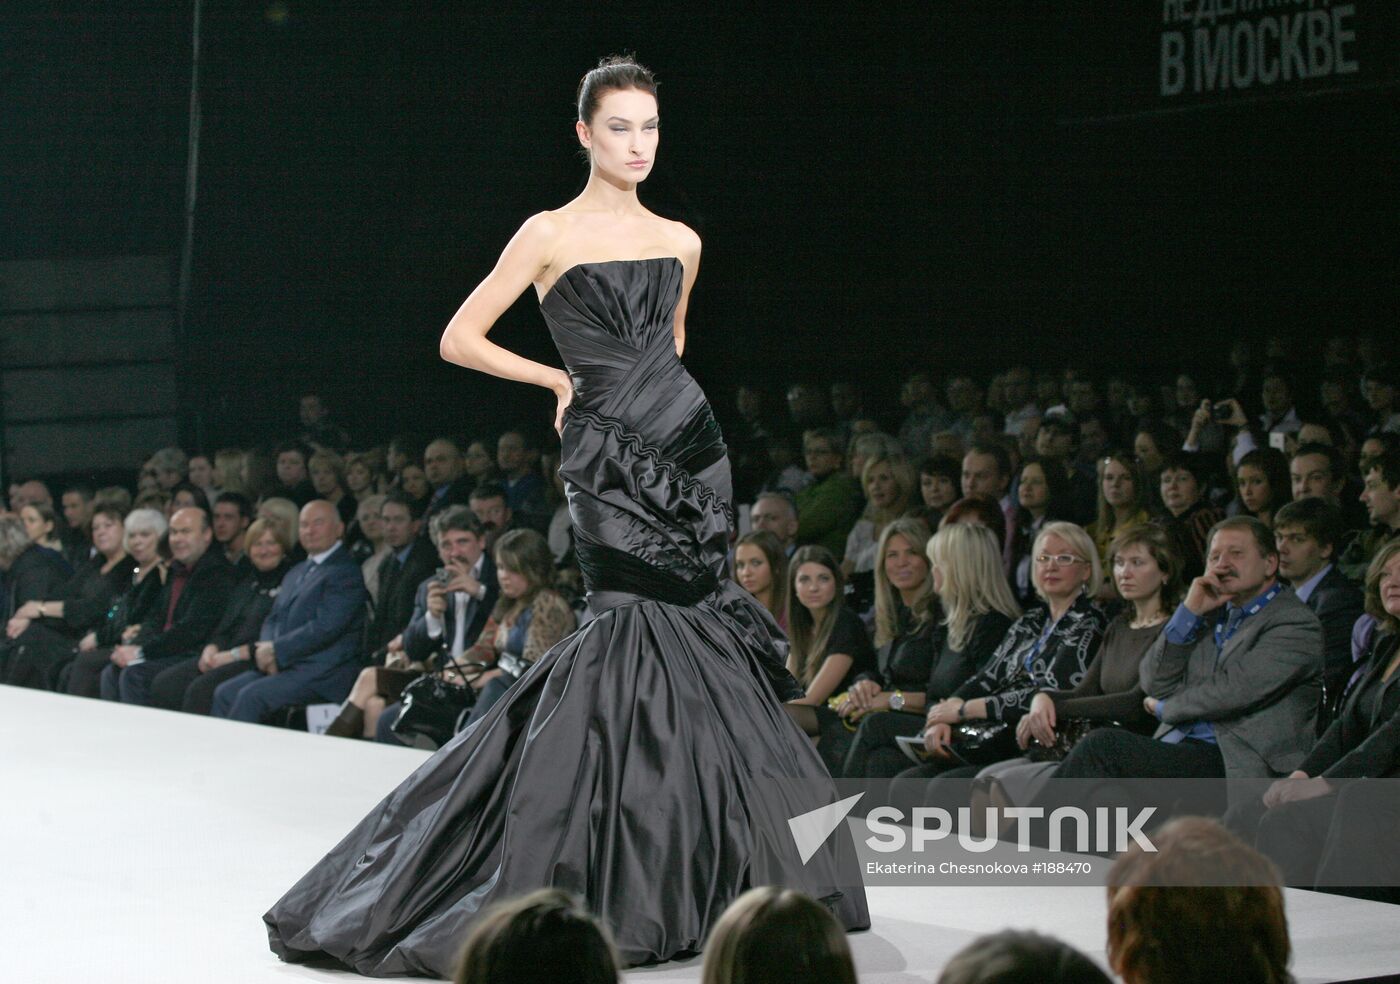 Moscow Fashion Week opening gala